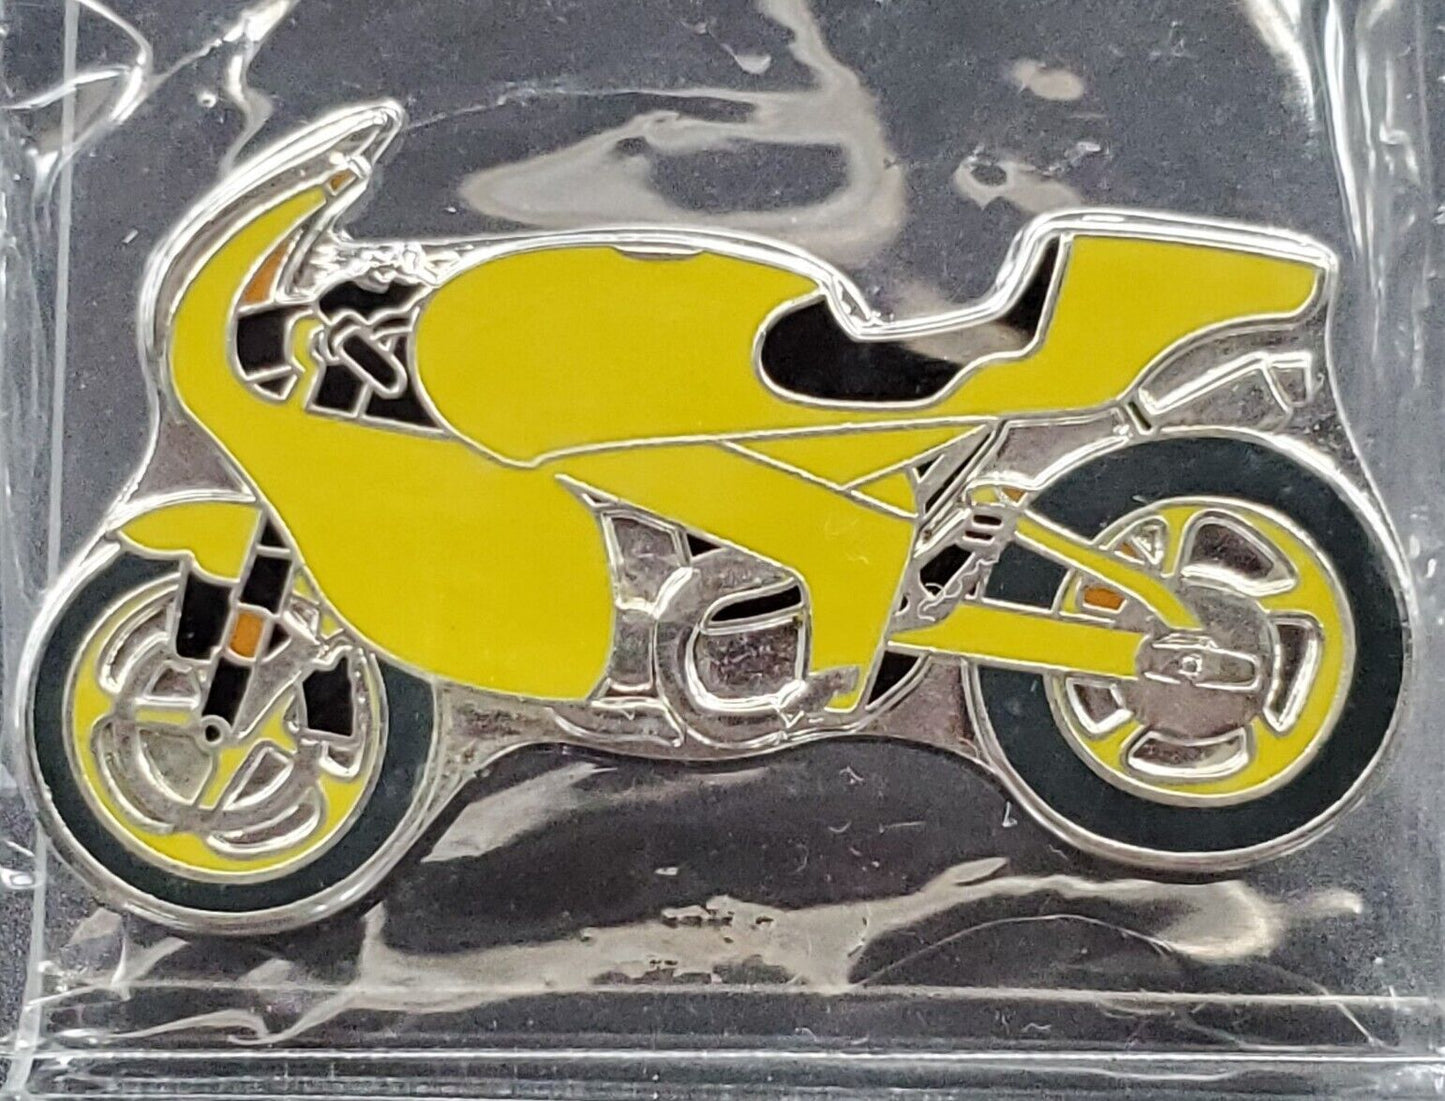 $1 Dollar SOMALI REPUBLIC MOTORCYCLE Shaped Coin - 2007 - Yellow Version Unc